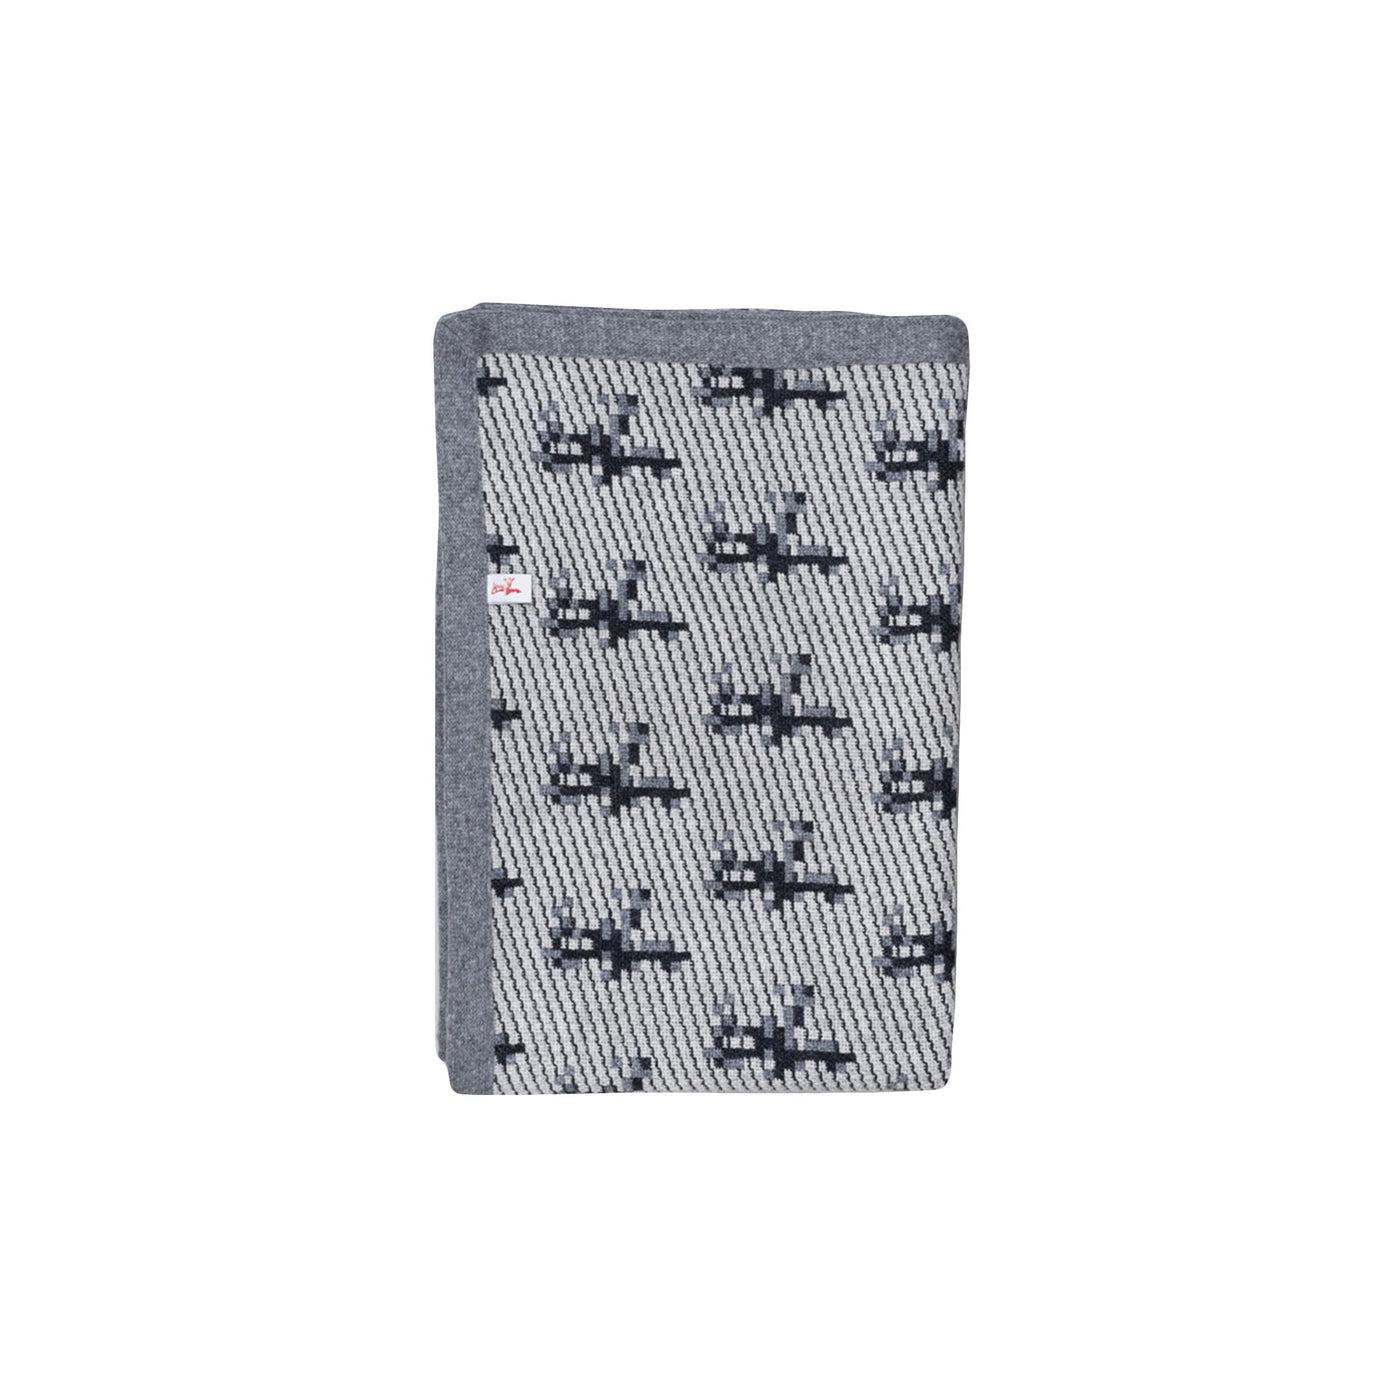 Wool Throw Blanket PUNTO PECORA Medium by Studiocharlie - Limited Edition 04